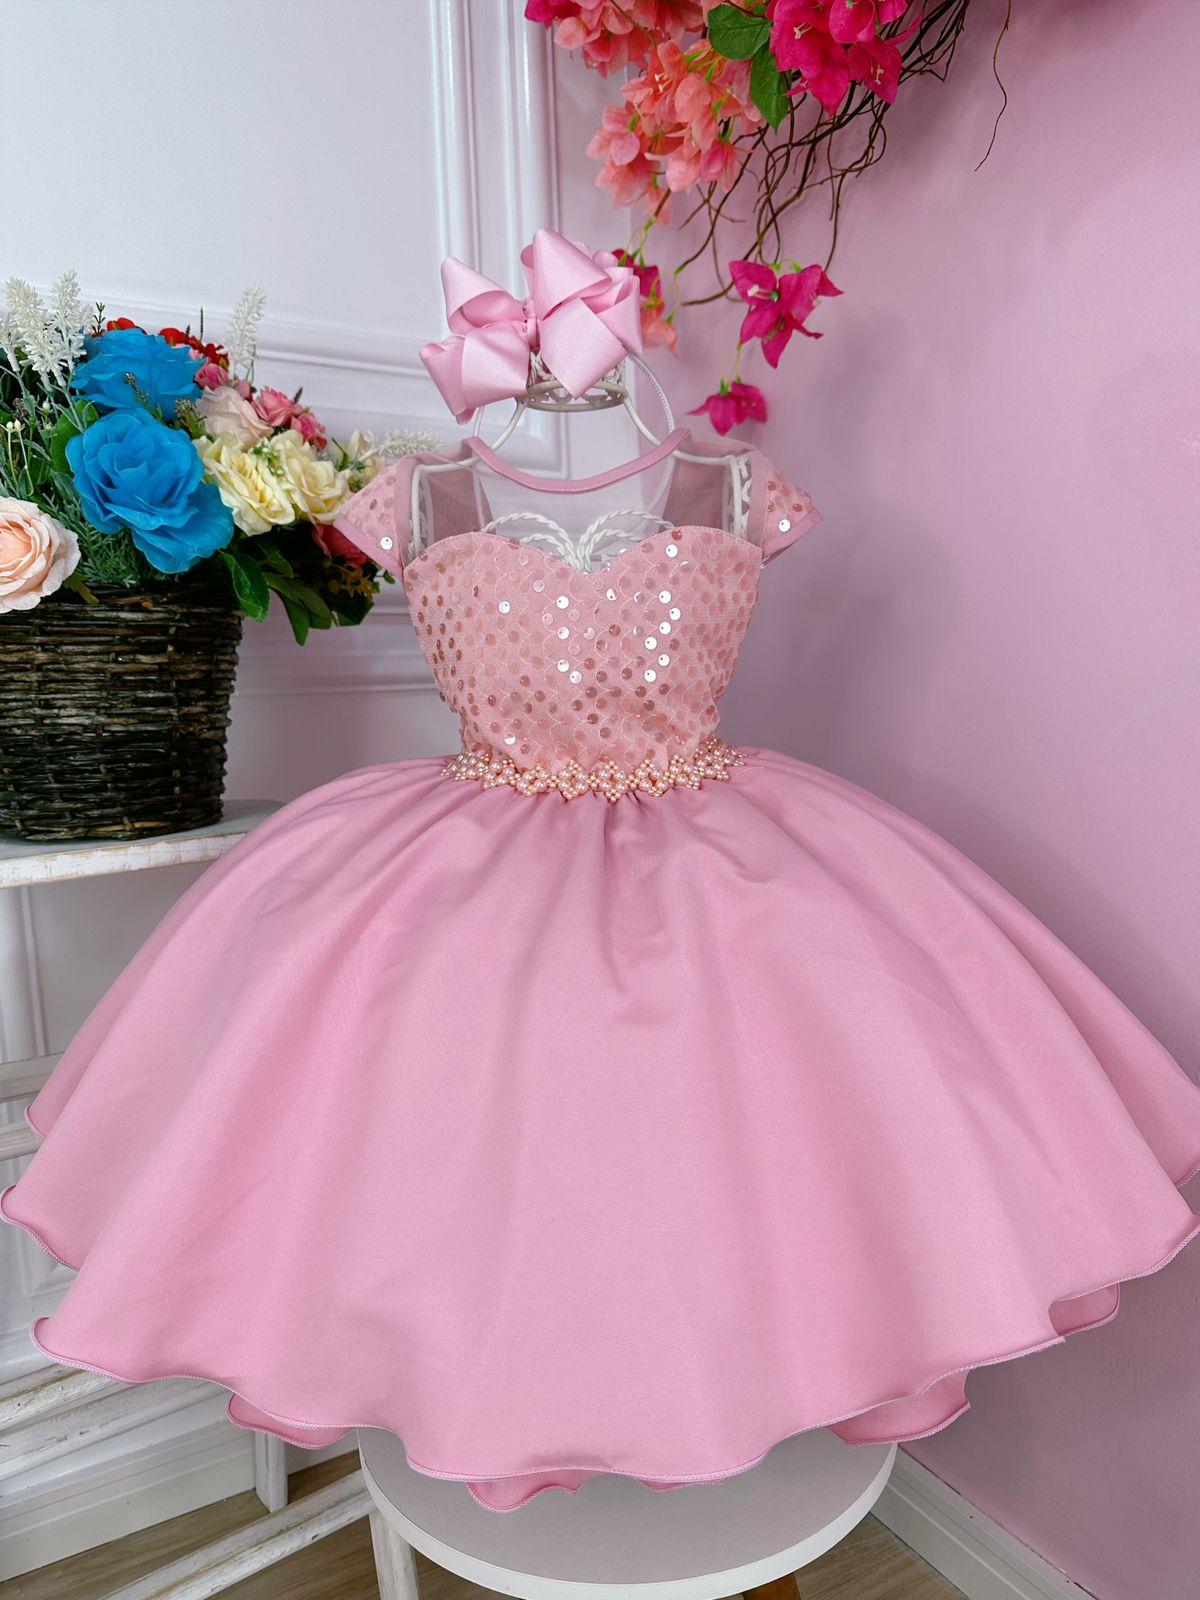 Vestido Infantil Rose Tule C/ Paetê Damas e Cinto de Pérolas